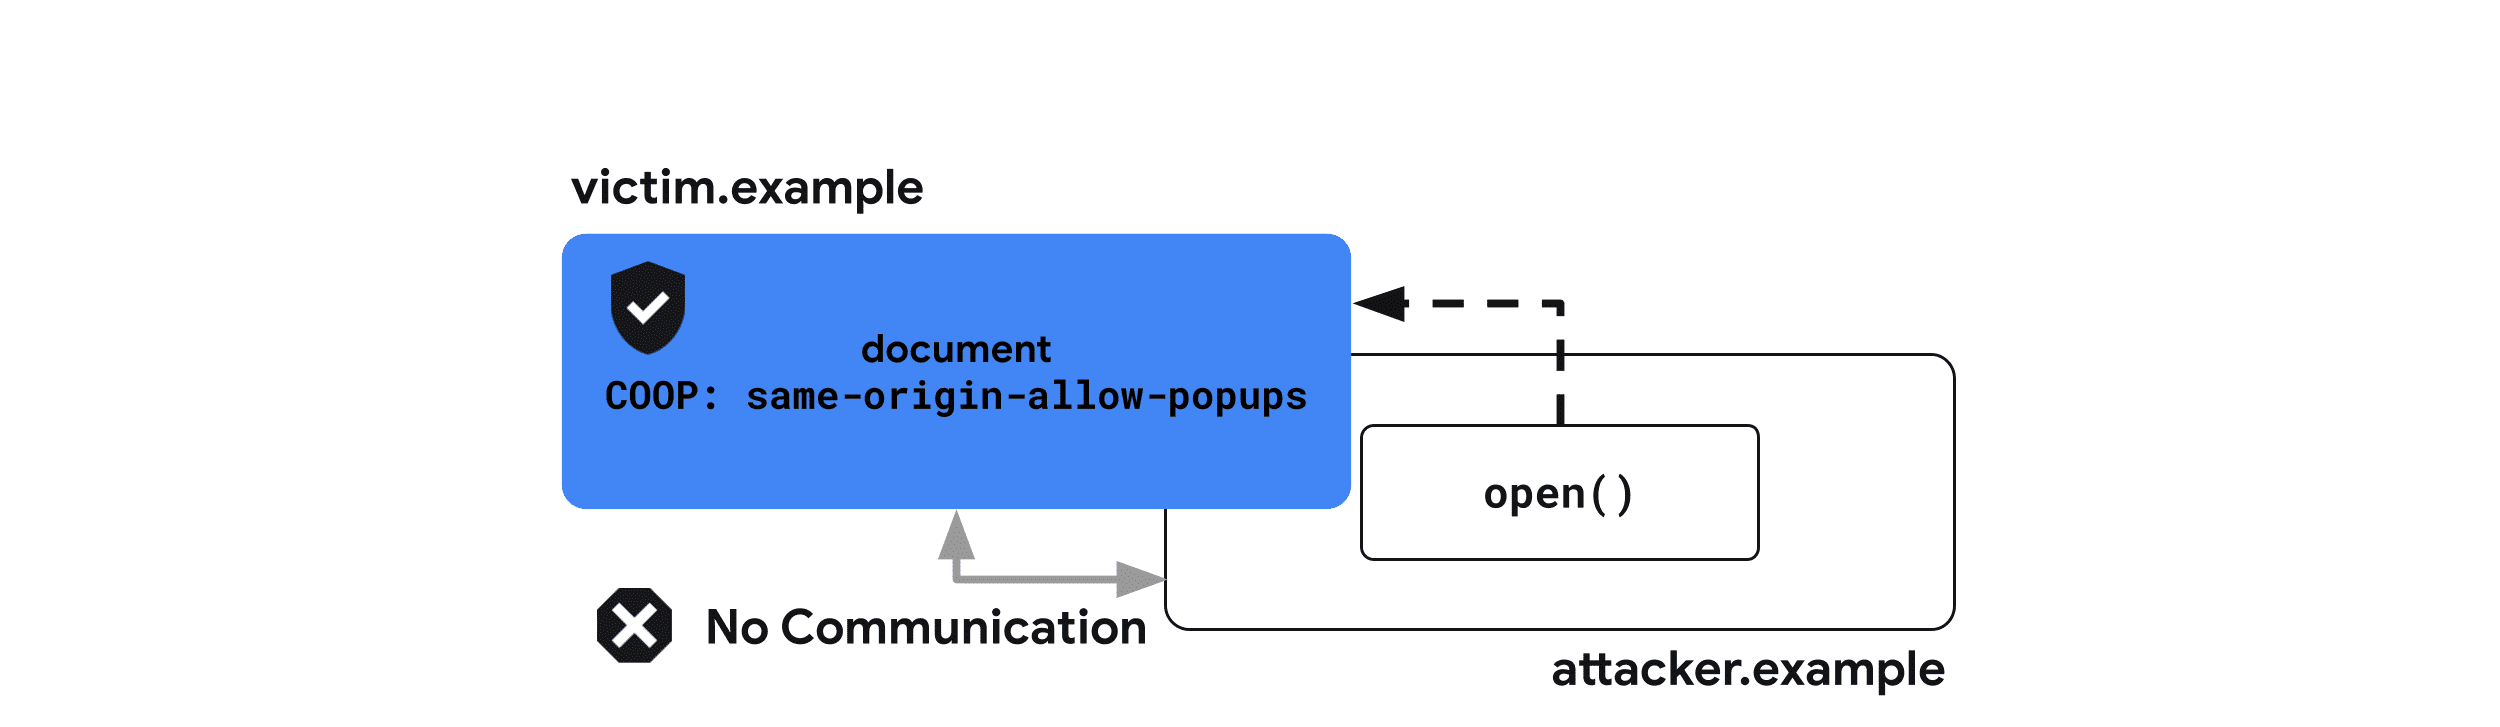 Cross-Origin-Opener-Richtlinie: Same-origin-allow-popups